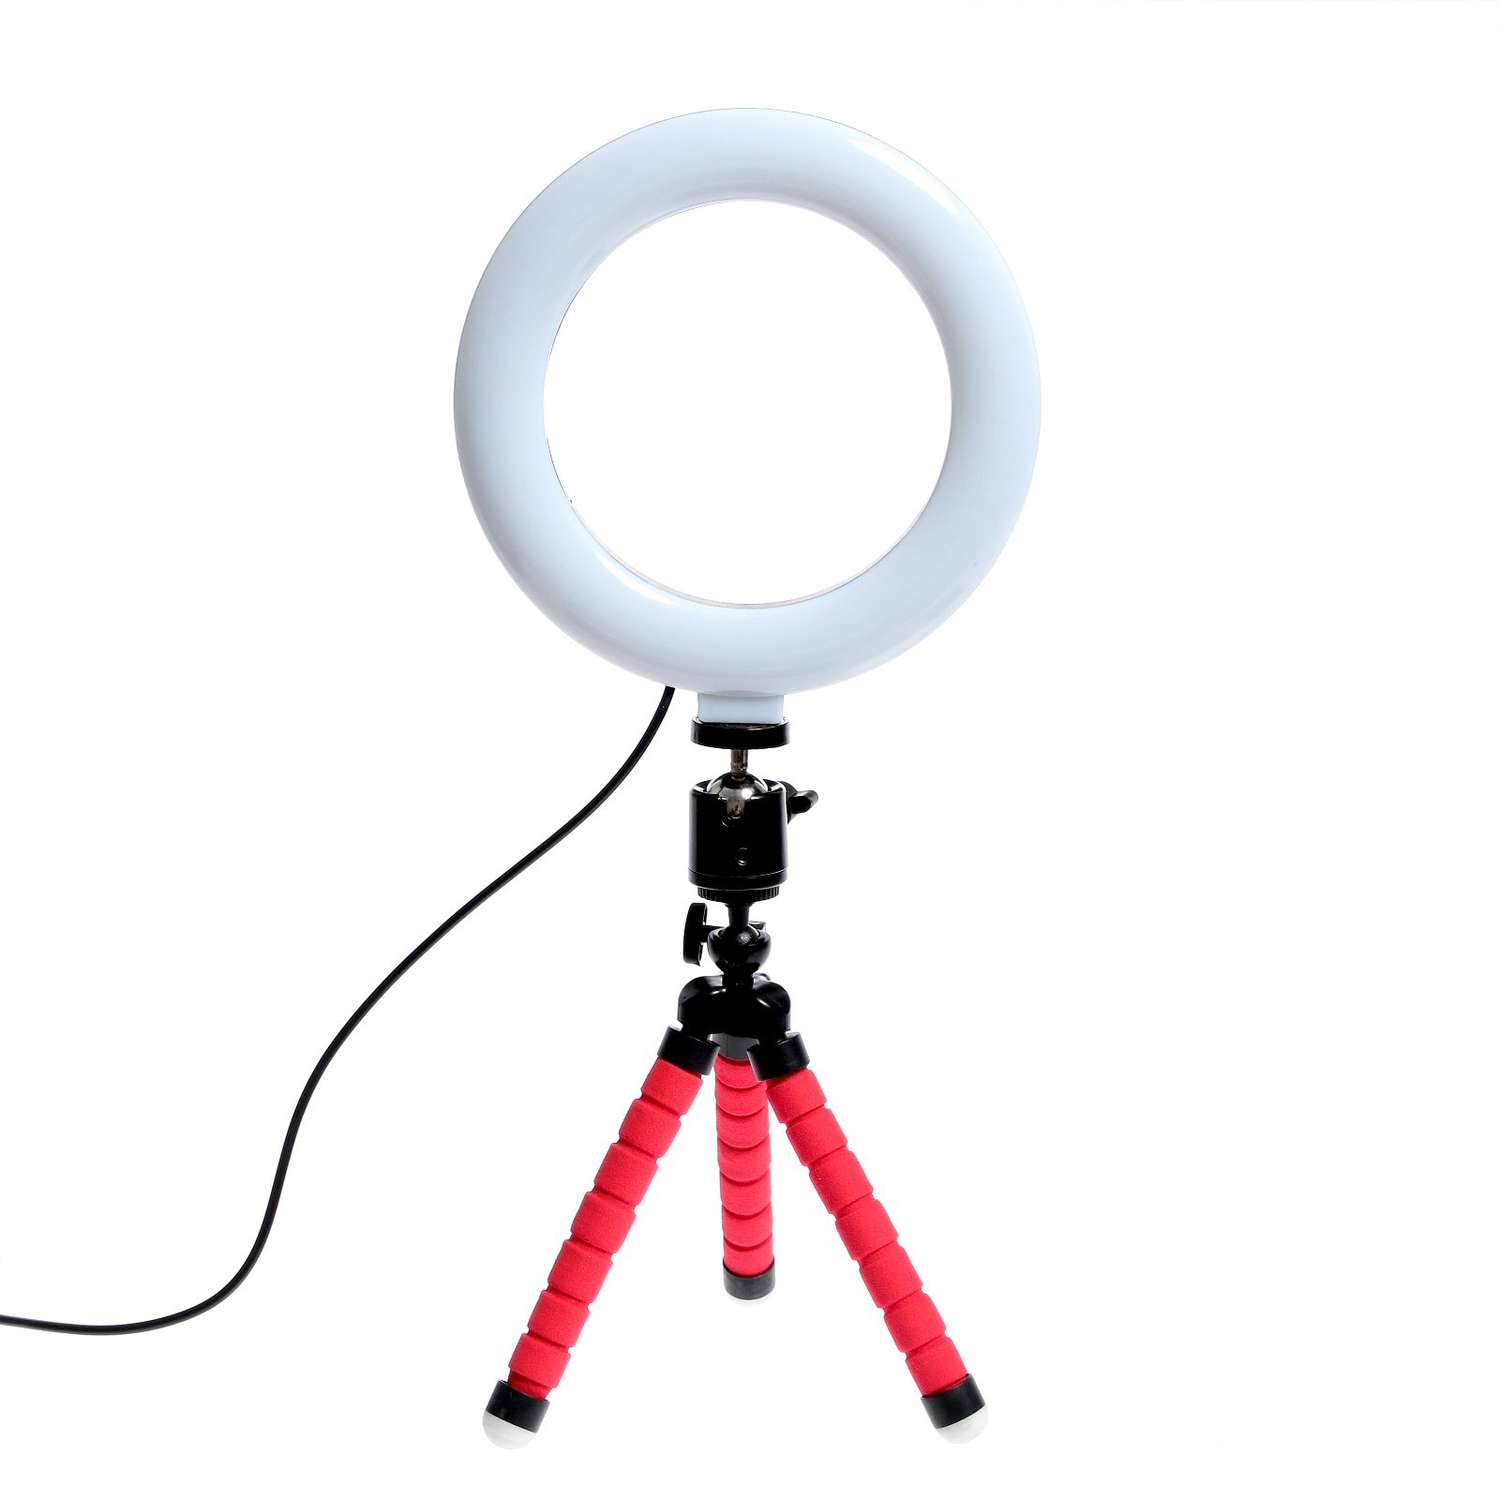 Кольцевая лампа Школа Талантов набор для съёмок видео - фото 7